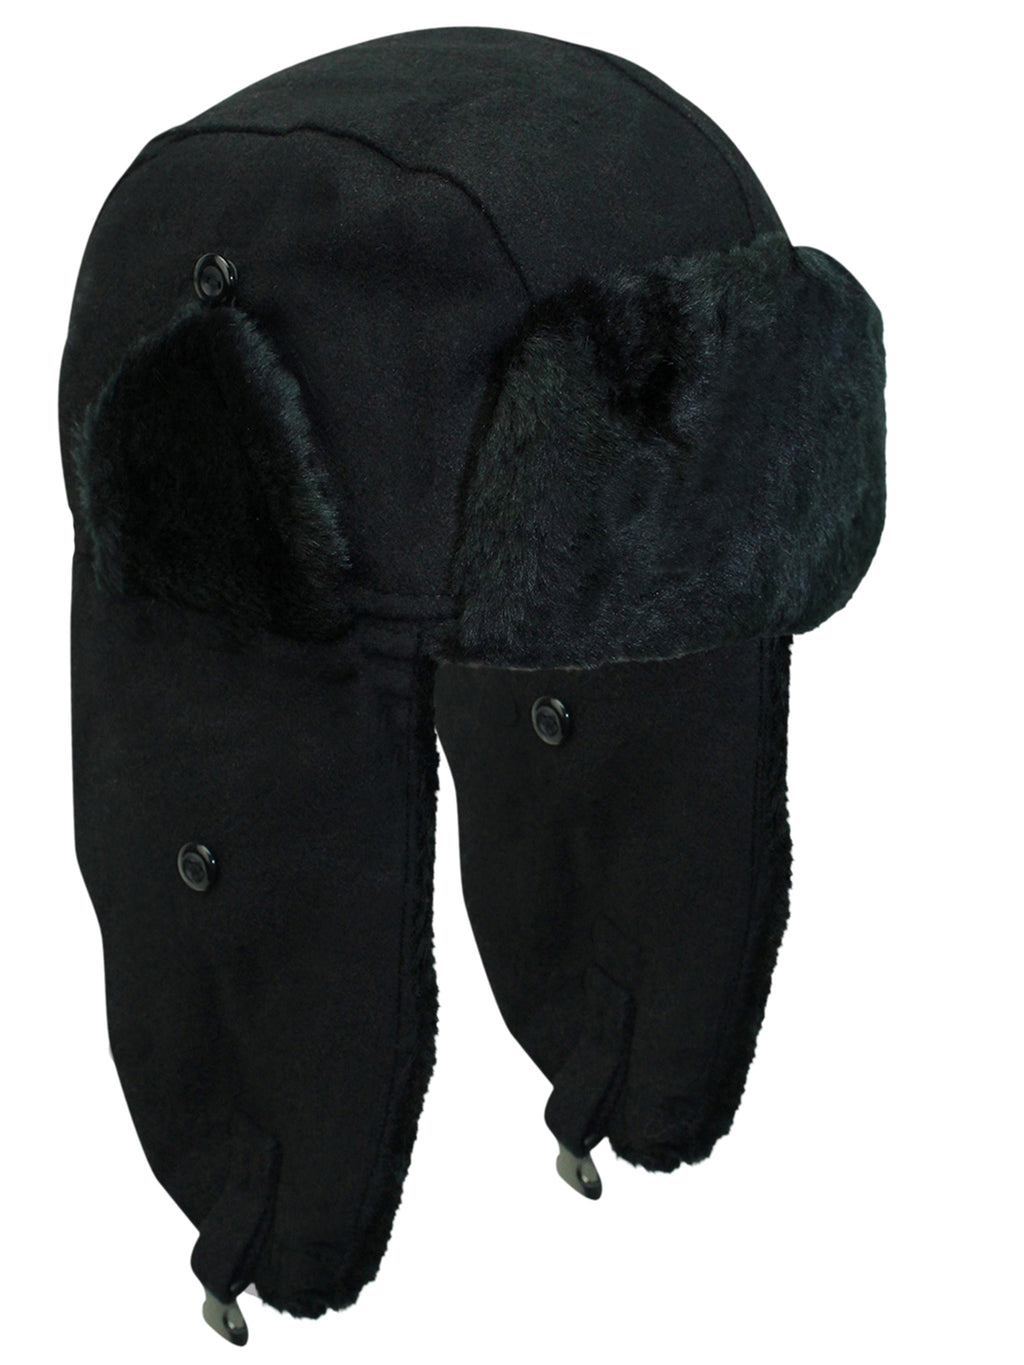 Black Wool Trapper Cap With Faux Fur Trim